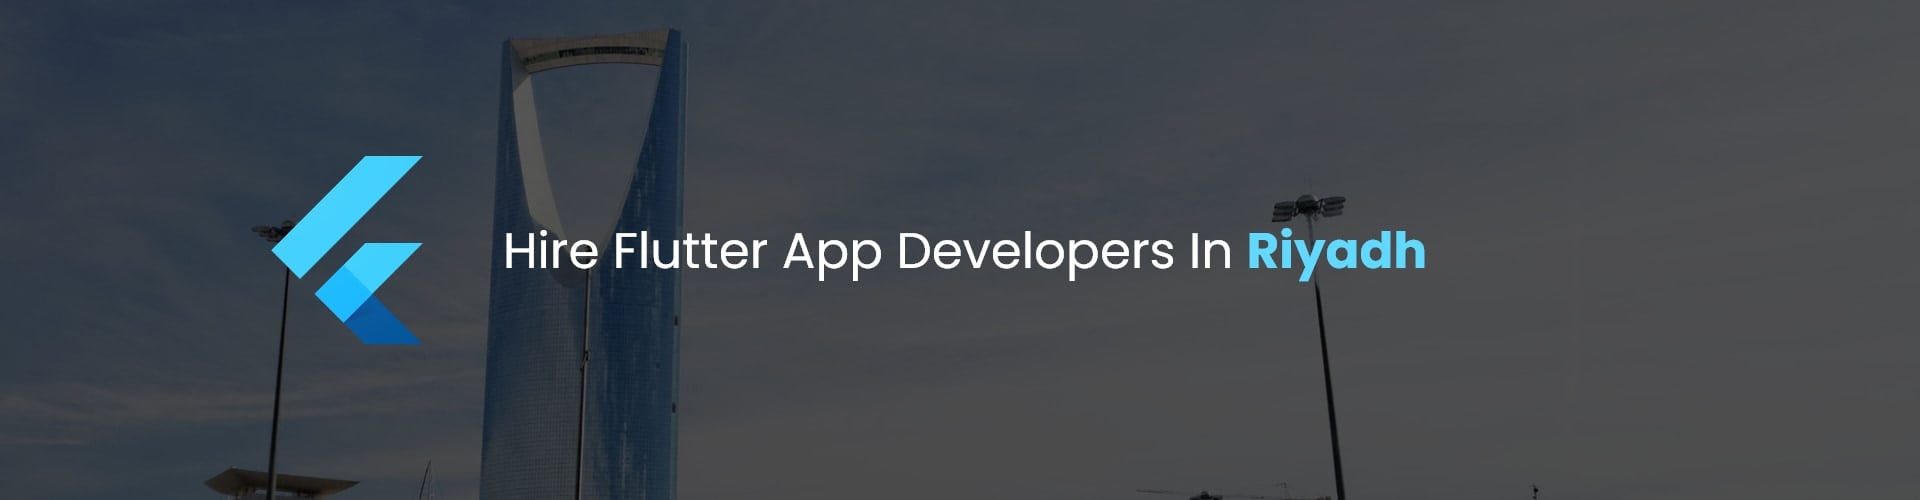 hire flutter app developers in riyadh